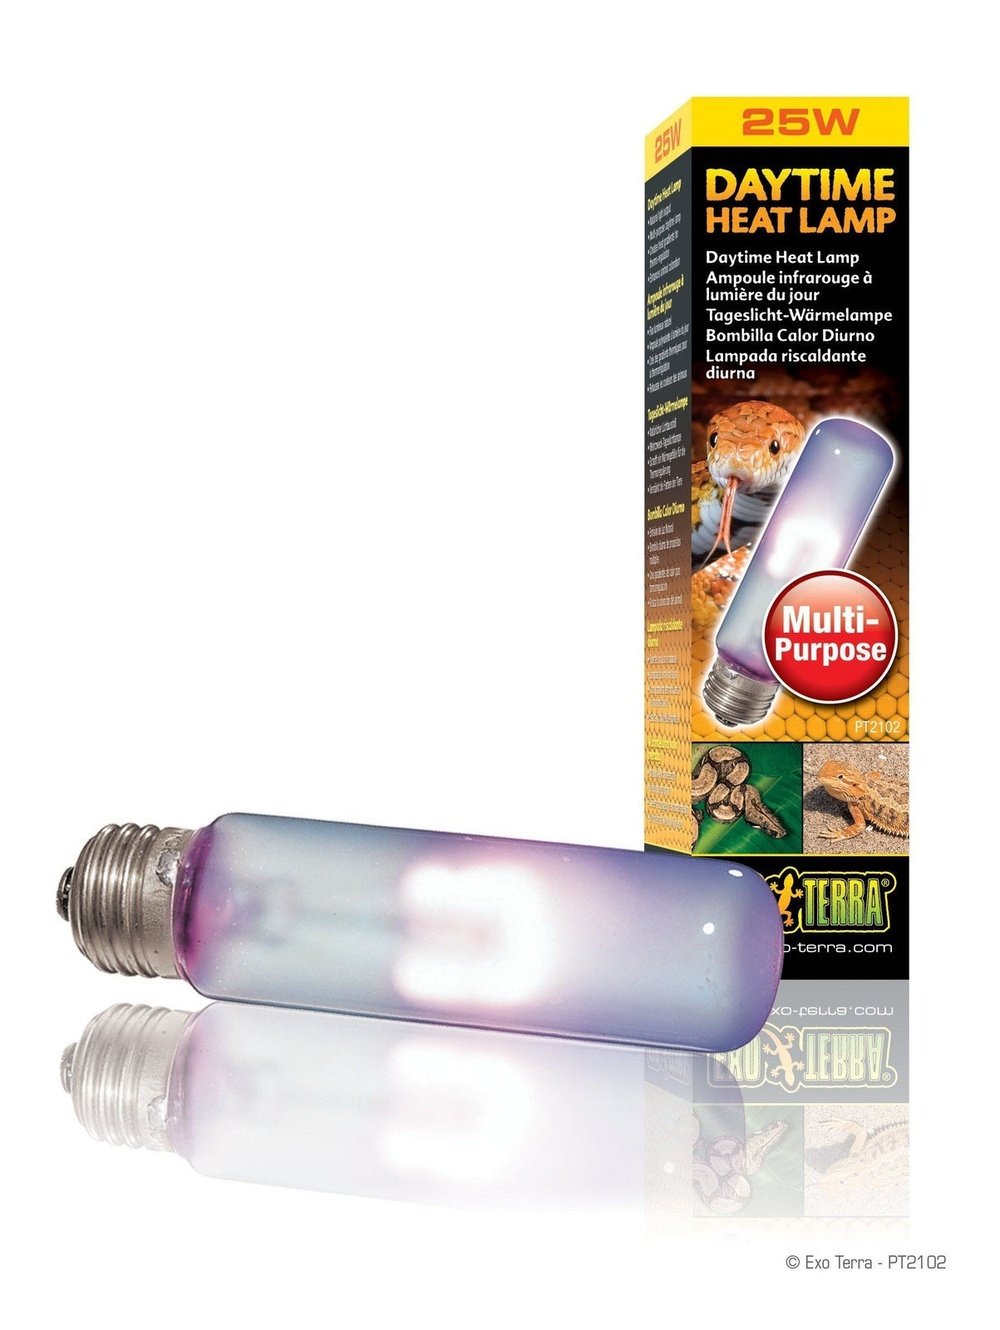 Exo Terra Daytime Heat Lamp, 25w - Dubia.com